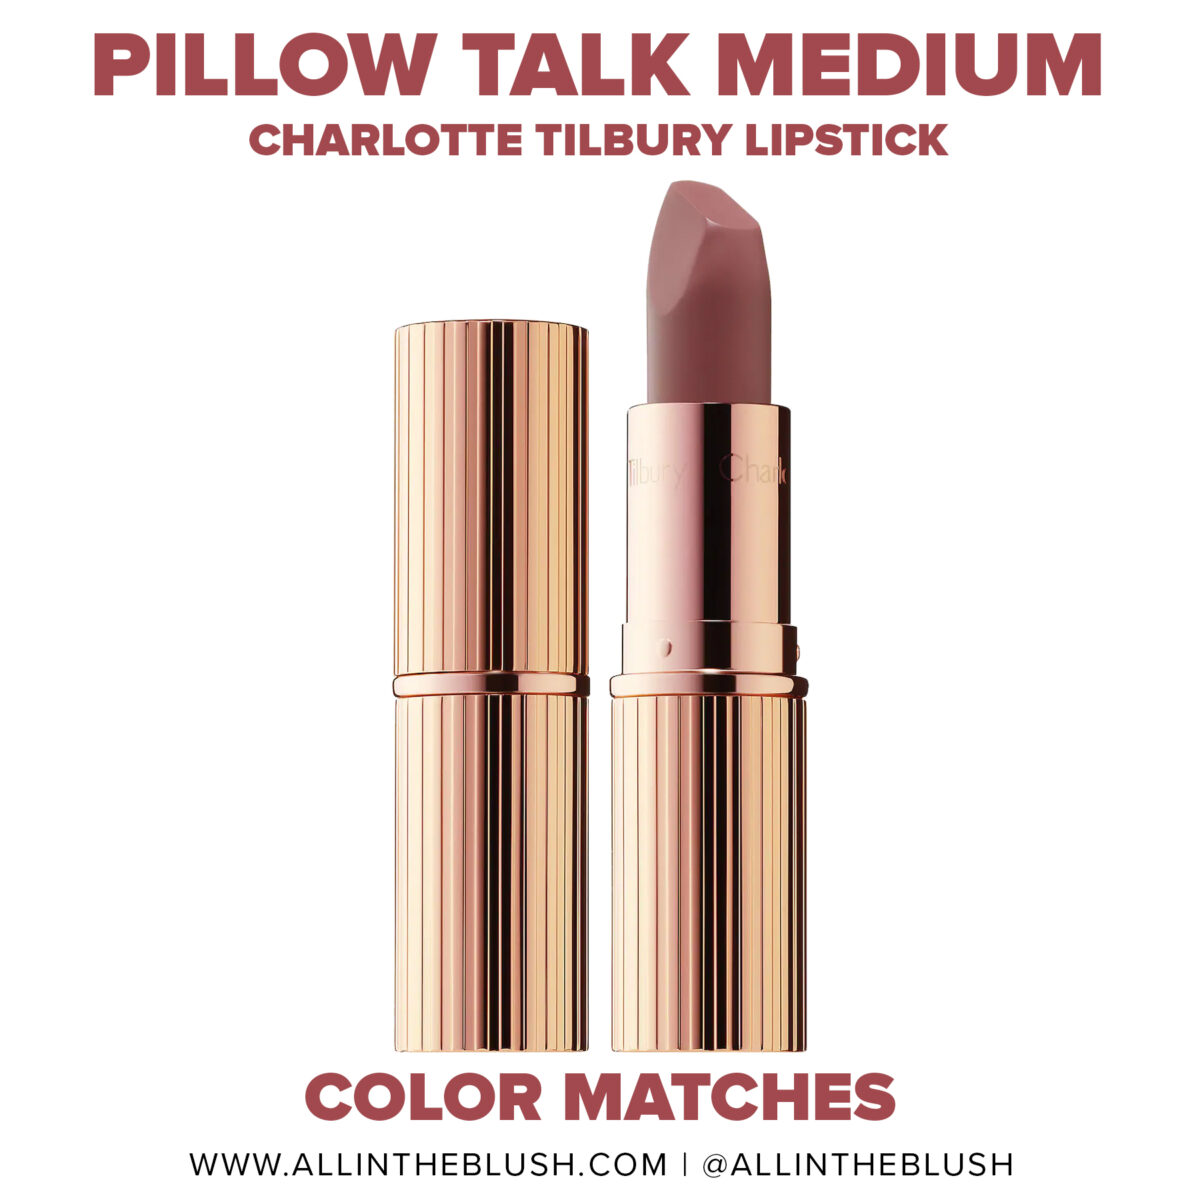 Charlotte Tilbury Pillow Talk Medium Matte Revolution Lipstick Dupes